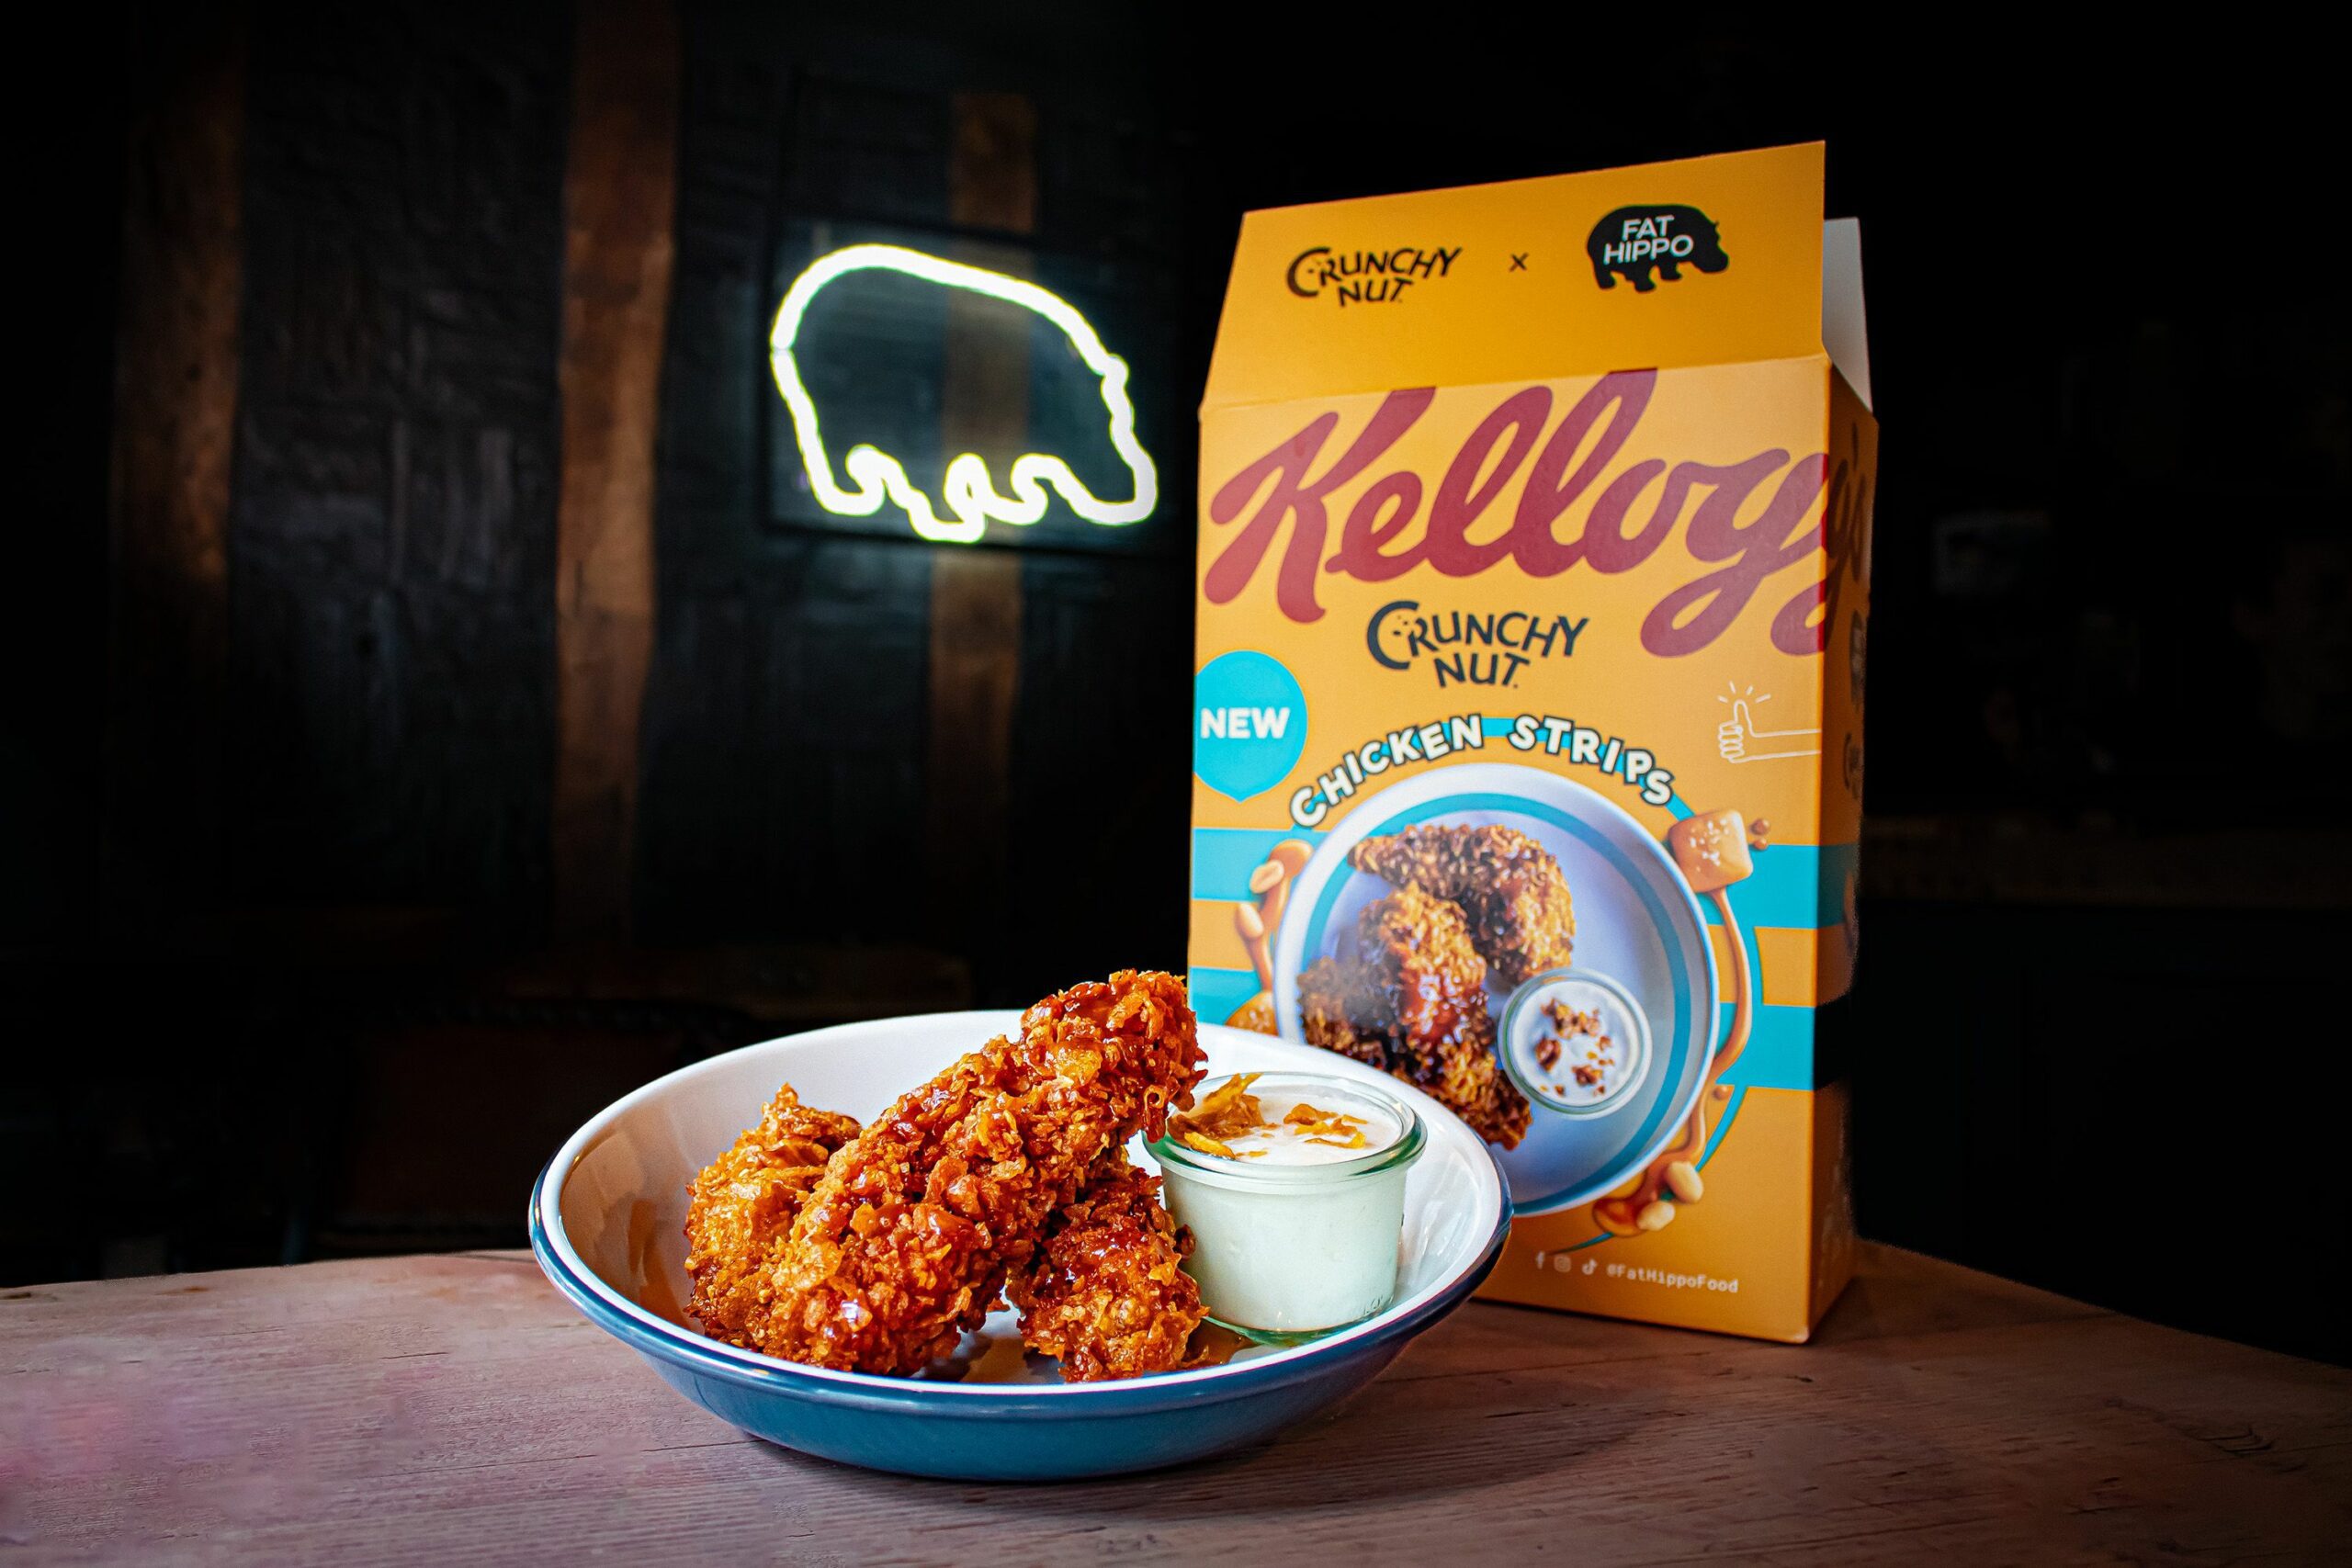 Fat Hippo x Kellogg's collaboration creates Crunchy Nut Salted Caramel chicken